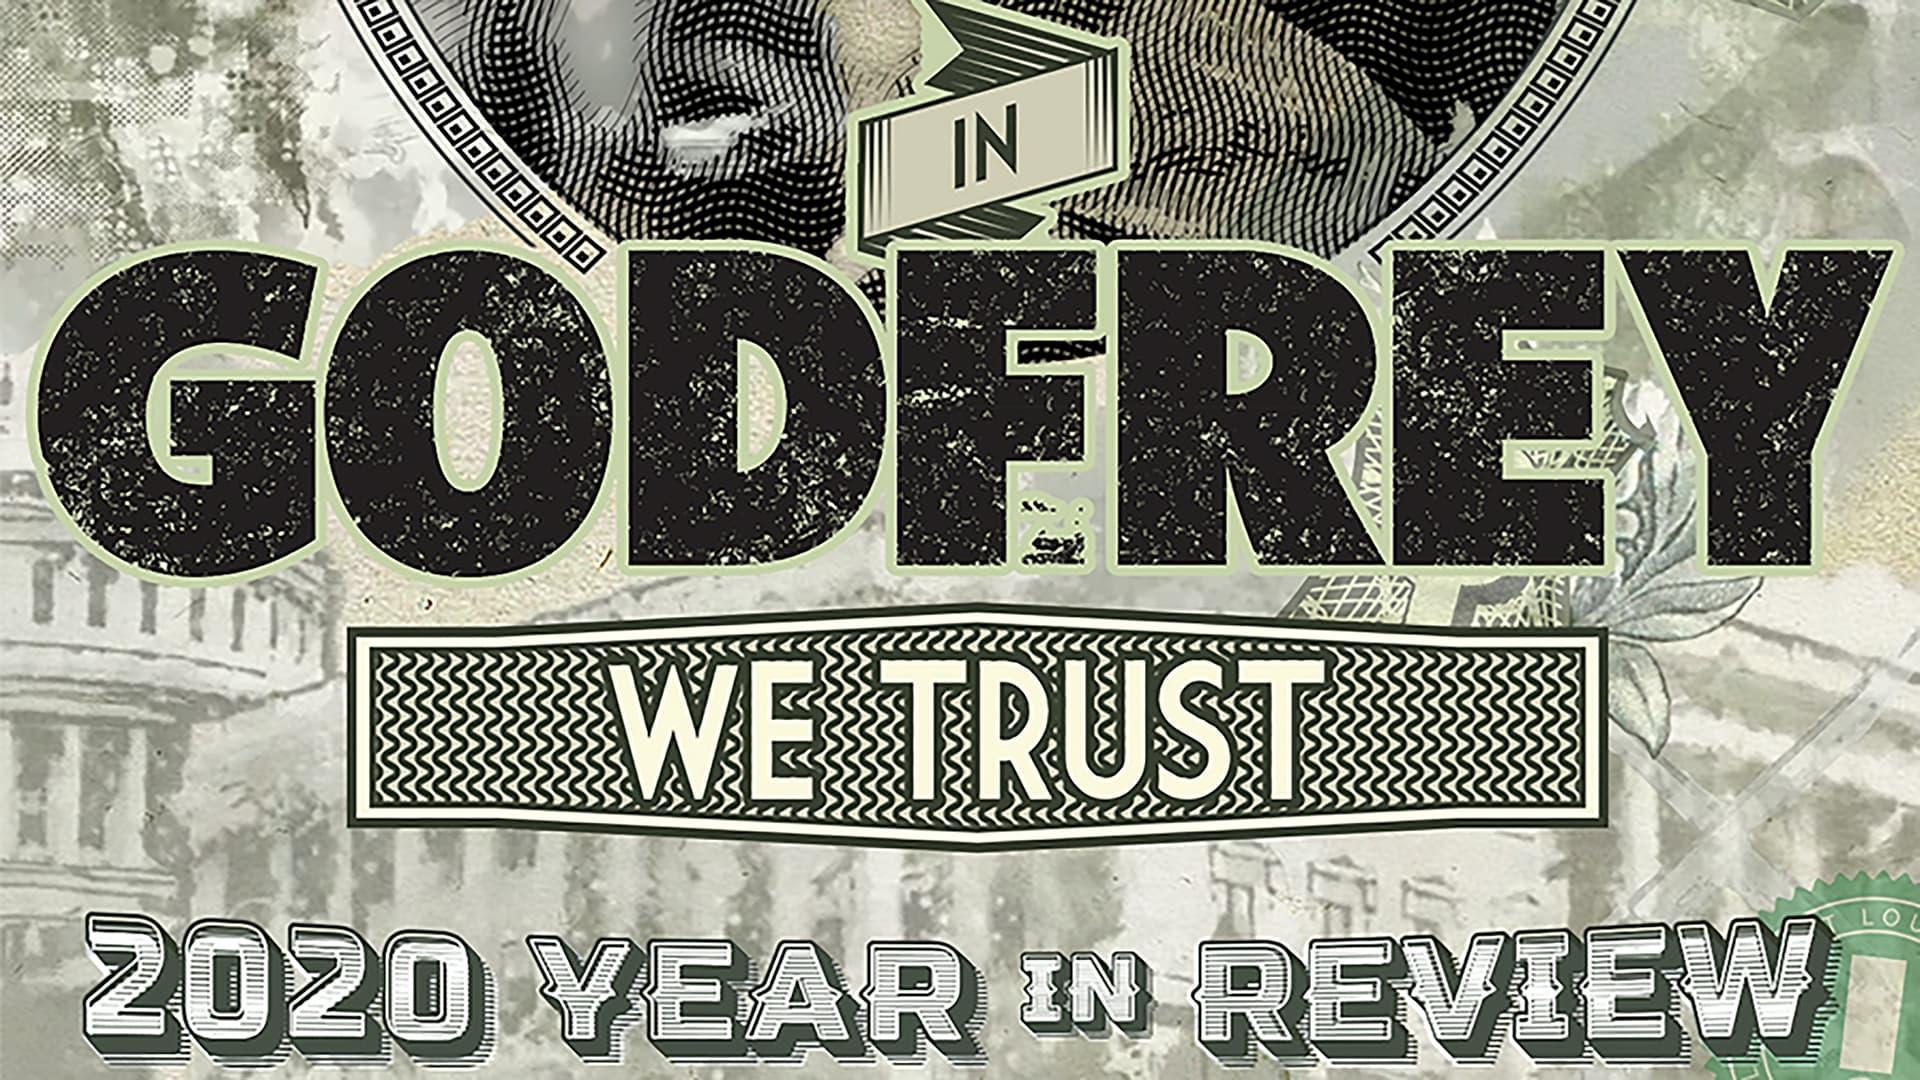 In Godfrey We Trust: 2020 Year In Review backdrop